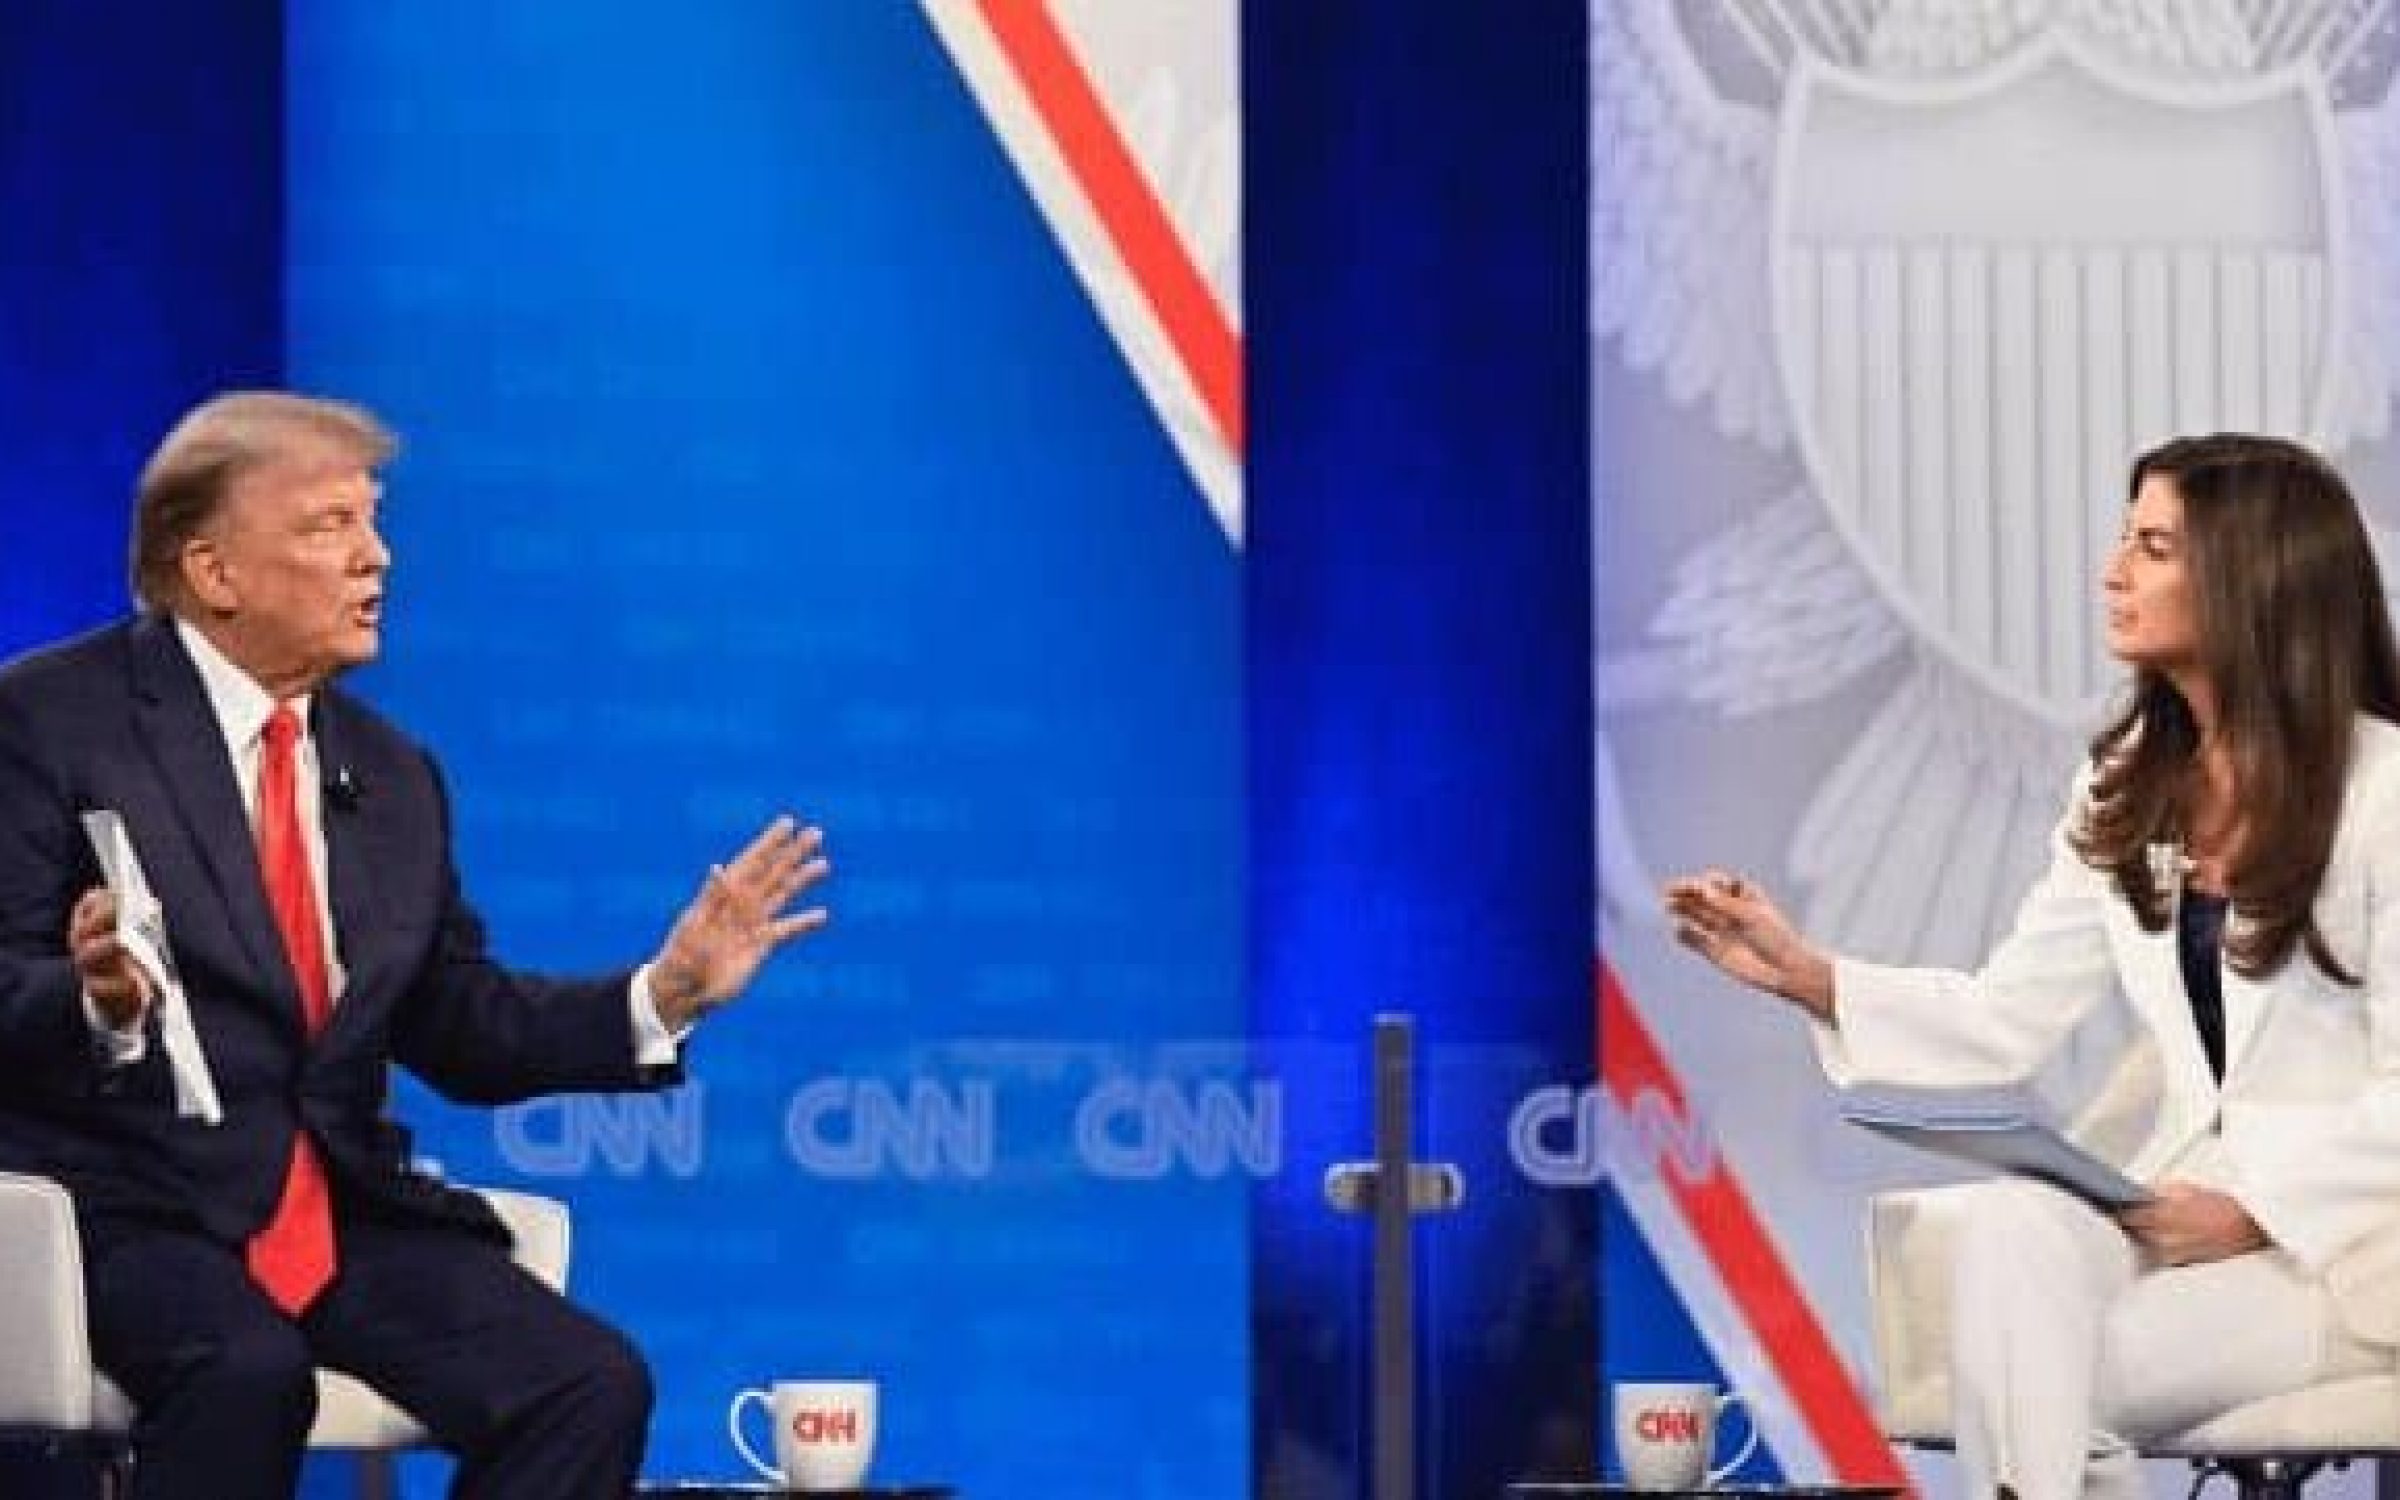 Donald Trump and Katilan Collins via CNN